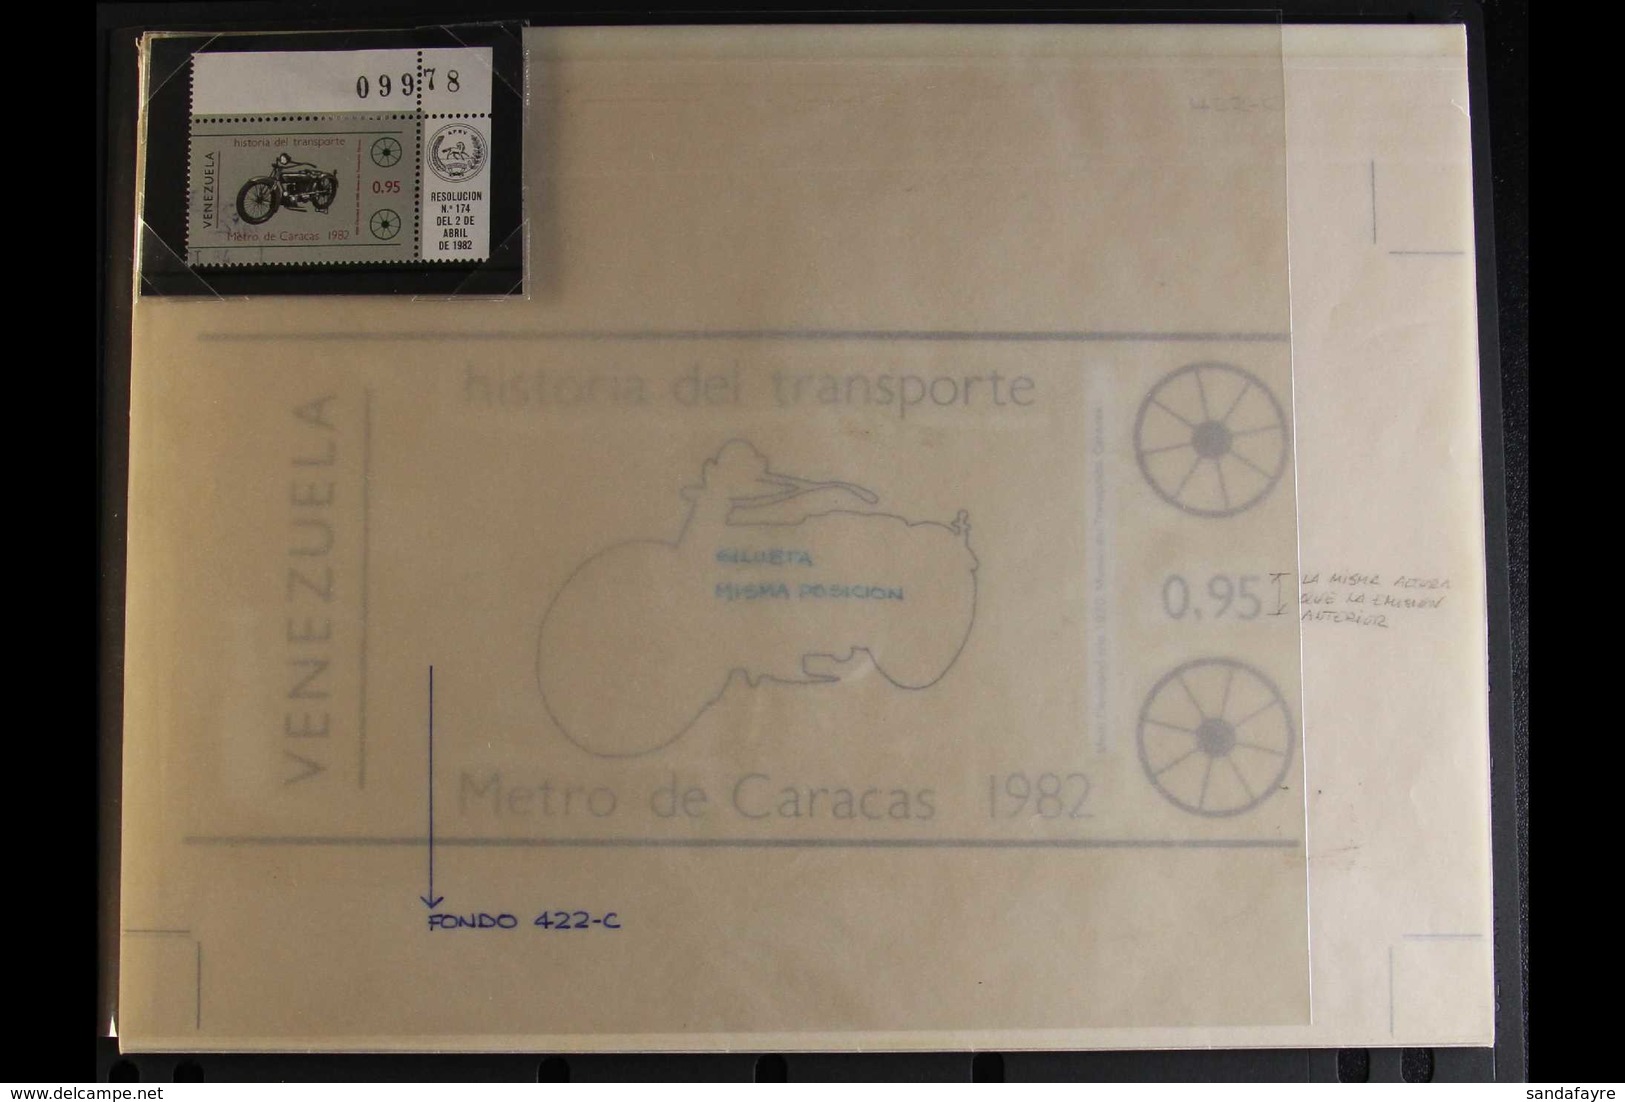 MOTORCYCLES ORIGINAL ARTWORK - Venezuela 1983 Transport 0.95c CLEVELAND MOTORCYCLE, Scott 1292, SG 2493, Design For Fram - Unclassified